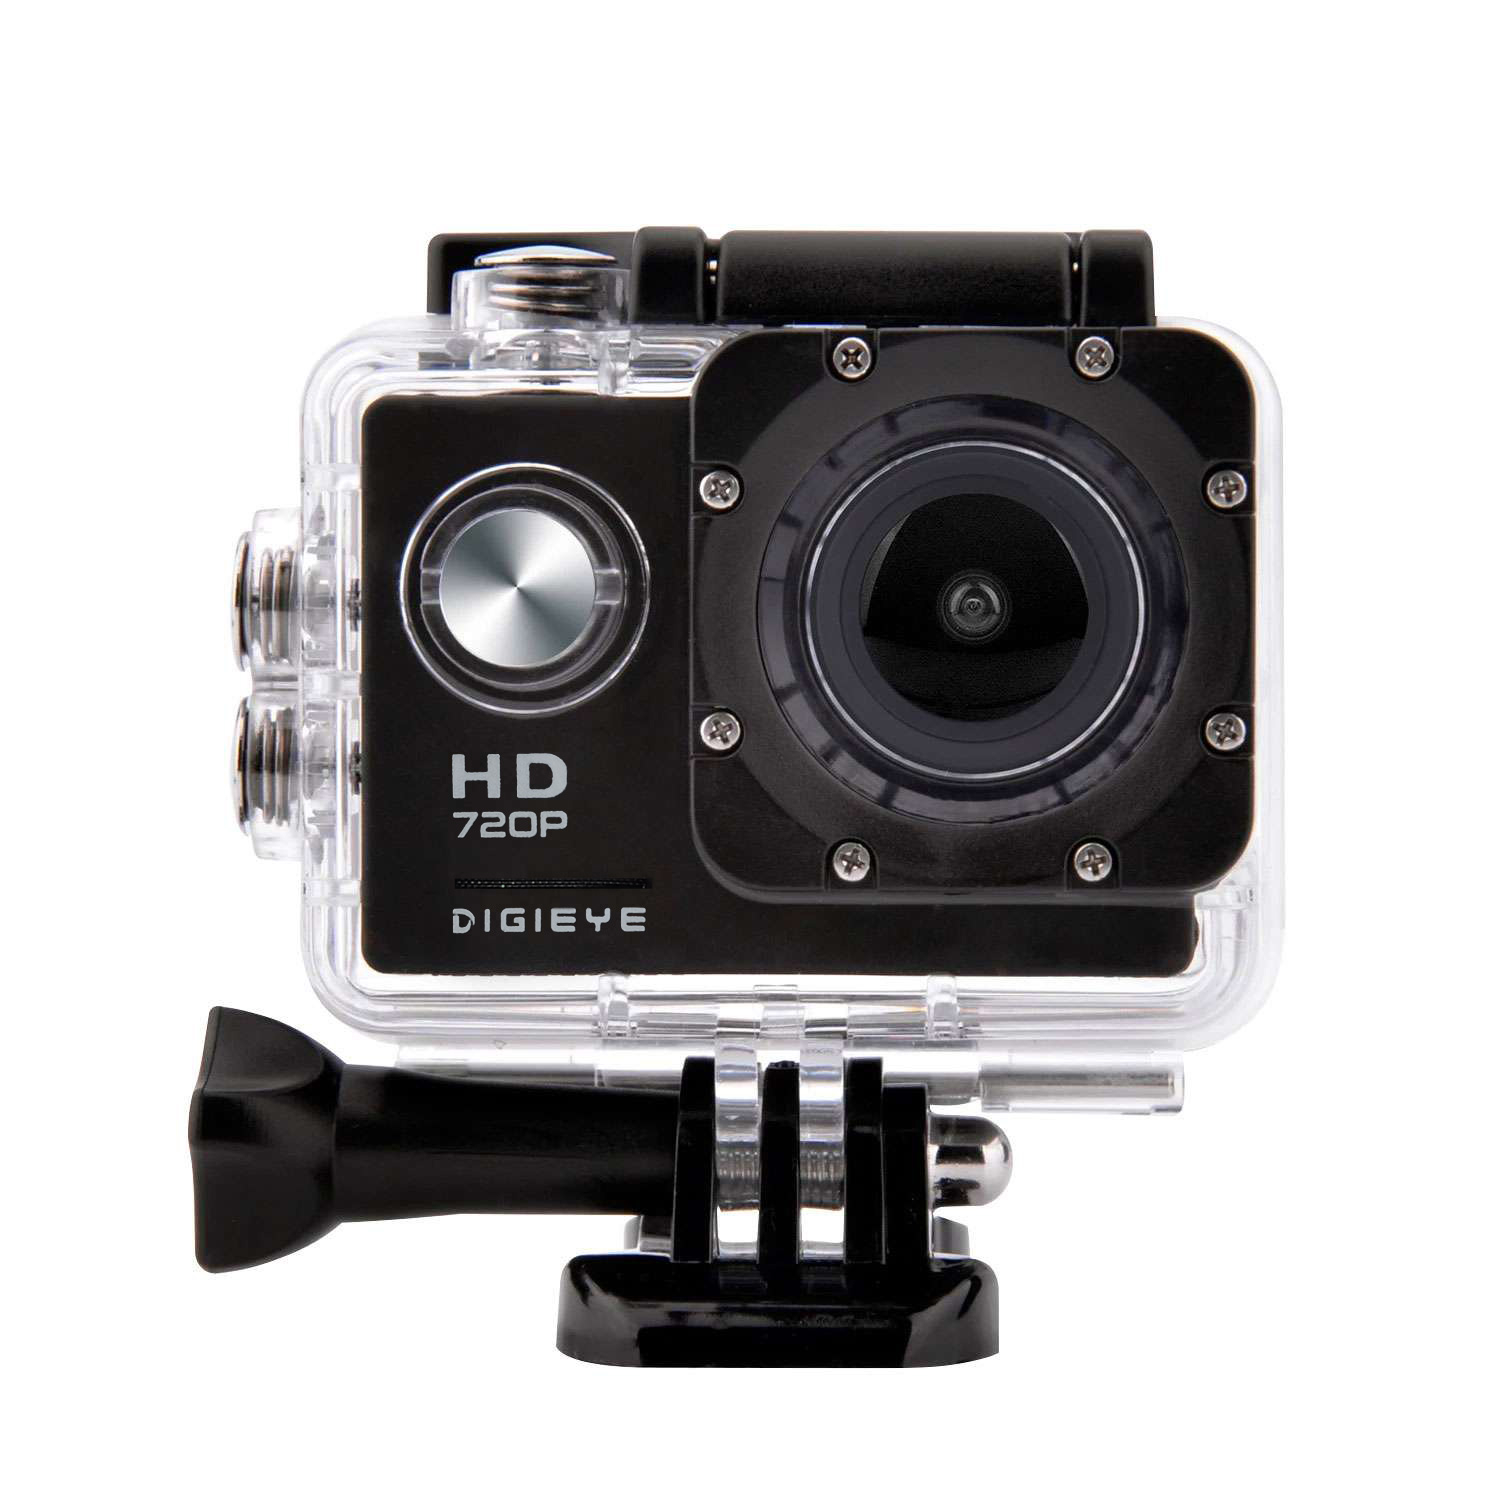 Digieye 720P Waterproof HD Action Camera Kit with 2